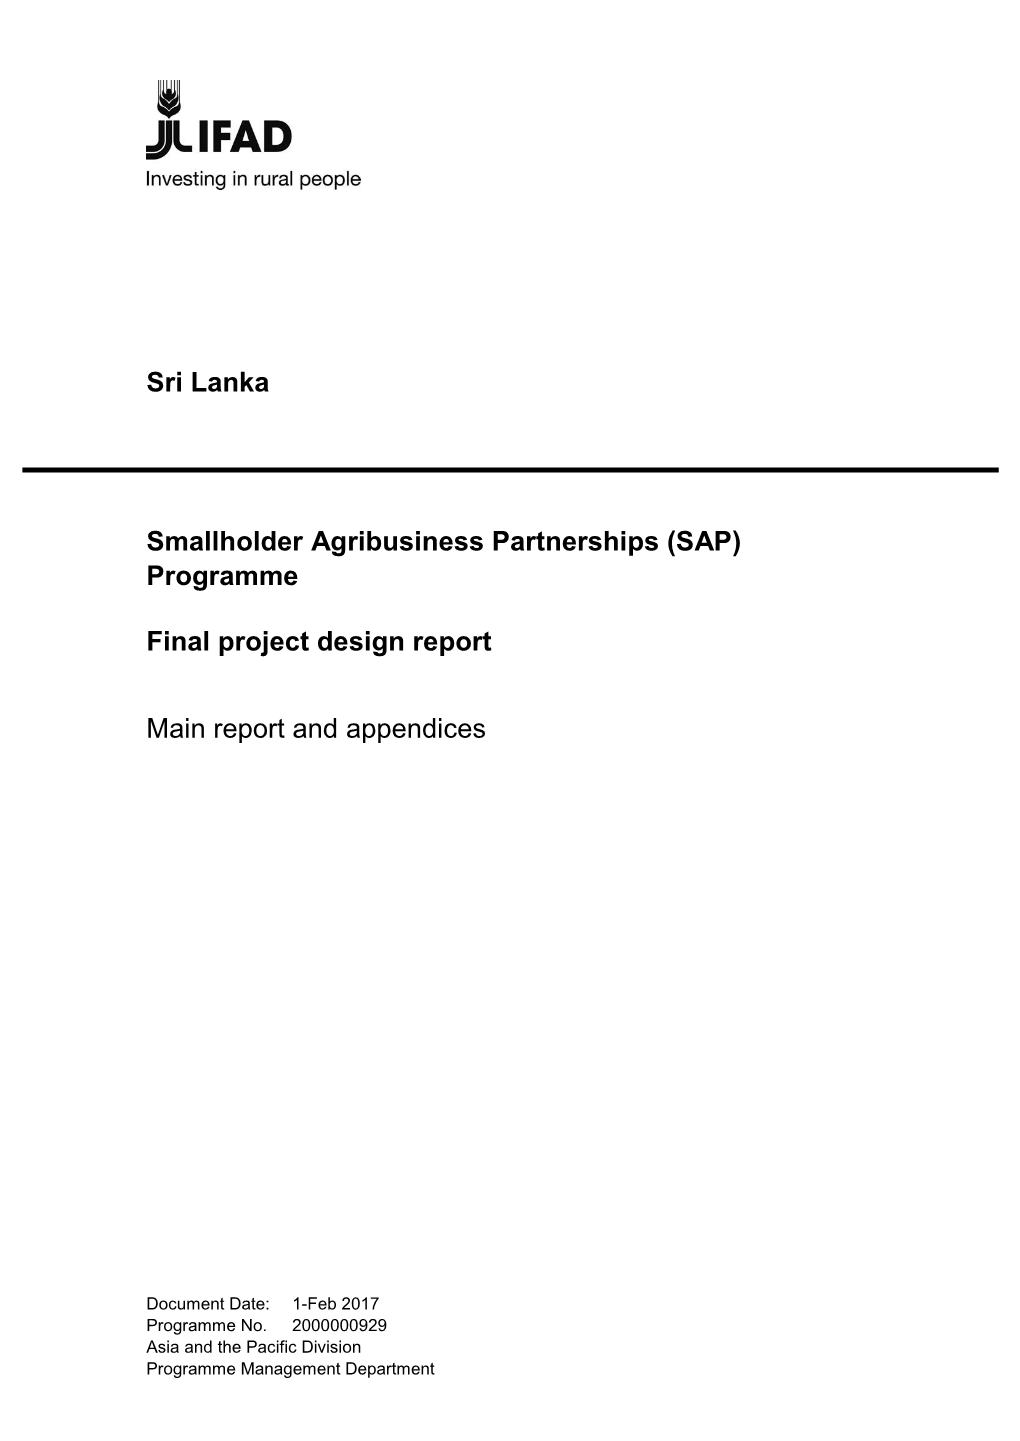 Smallholder Agribusiness Partnerships (SAP) Programme